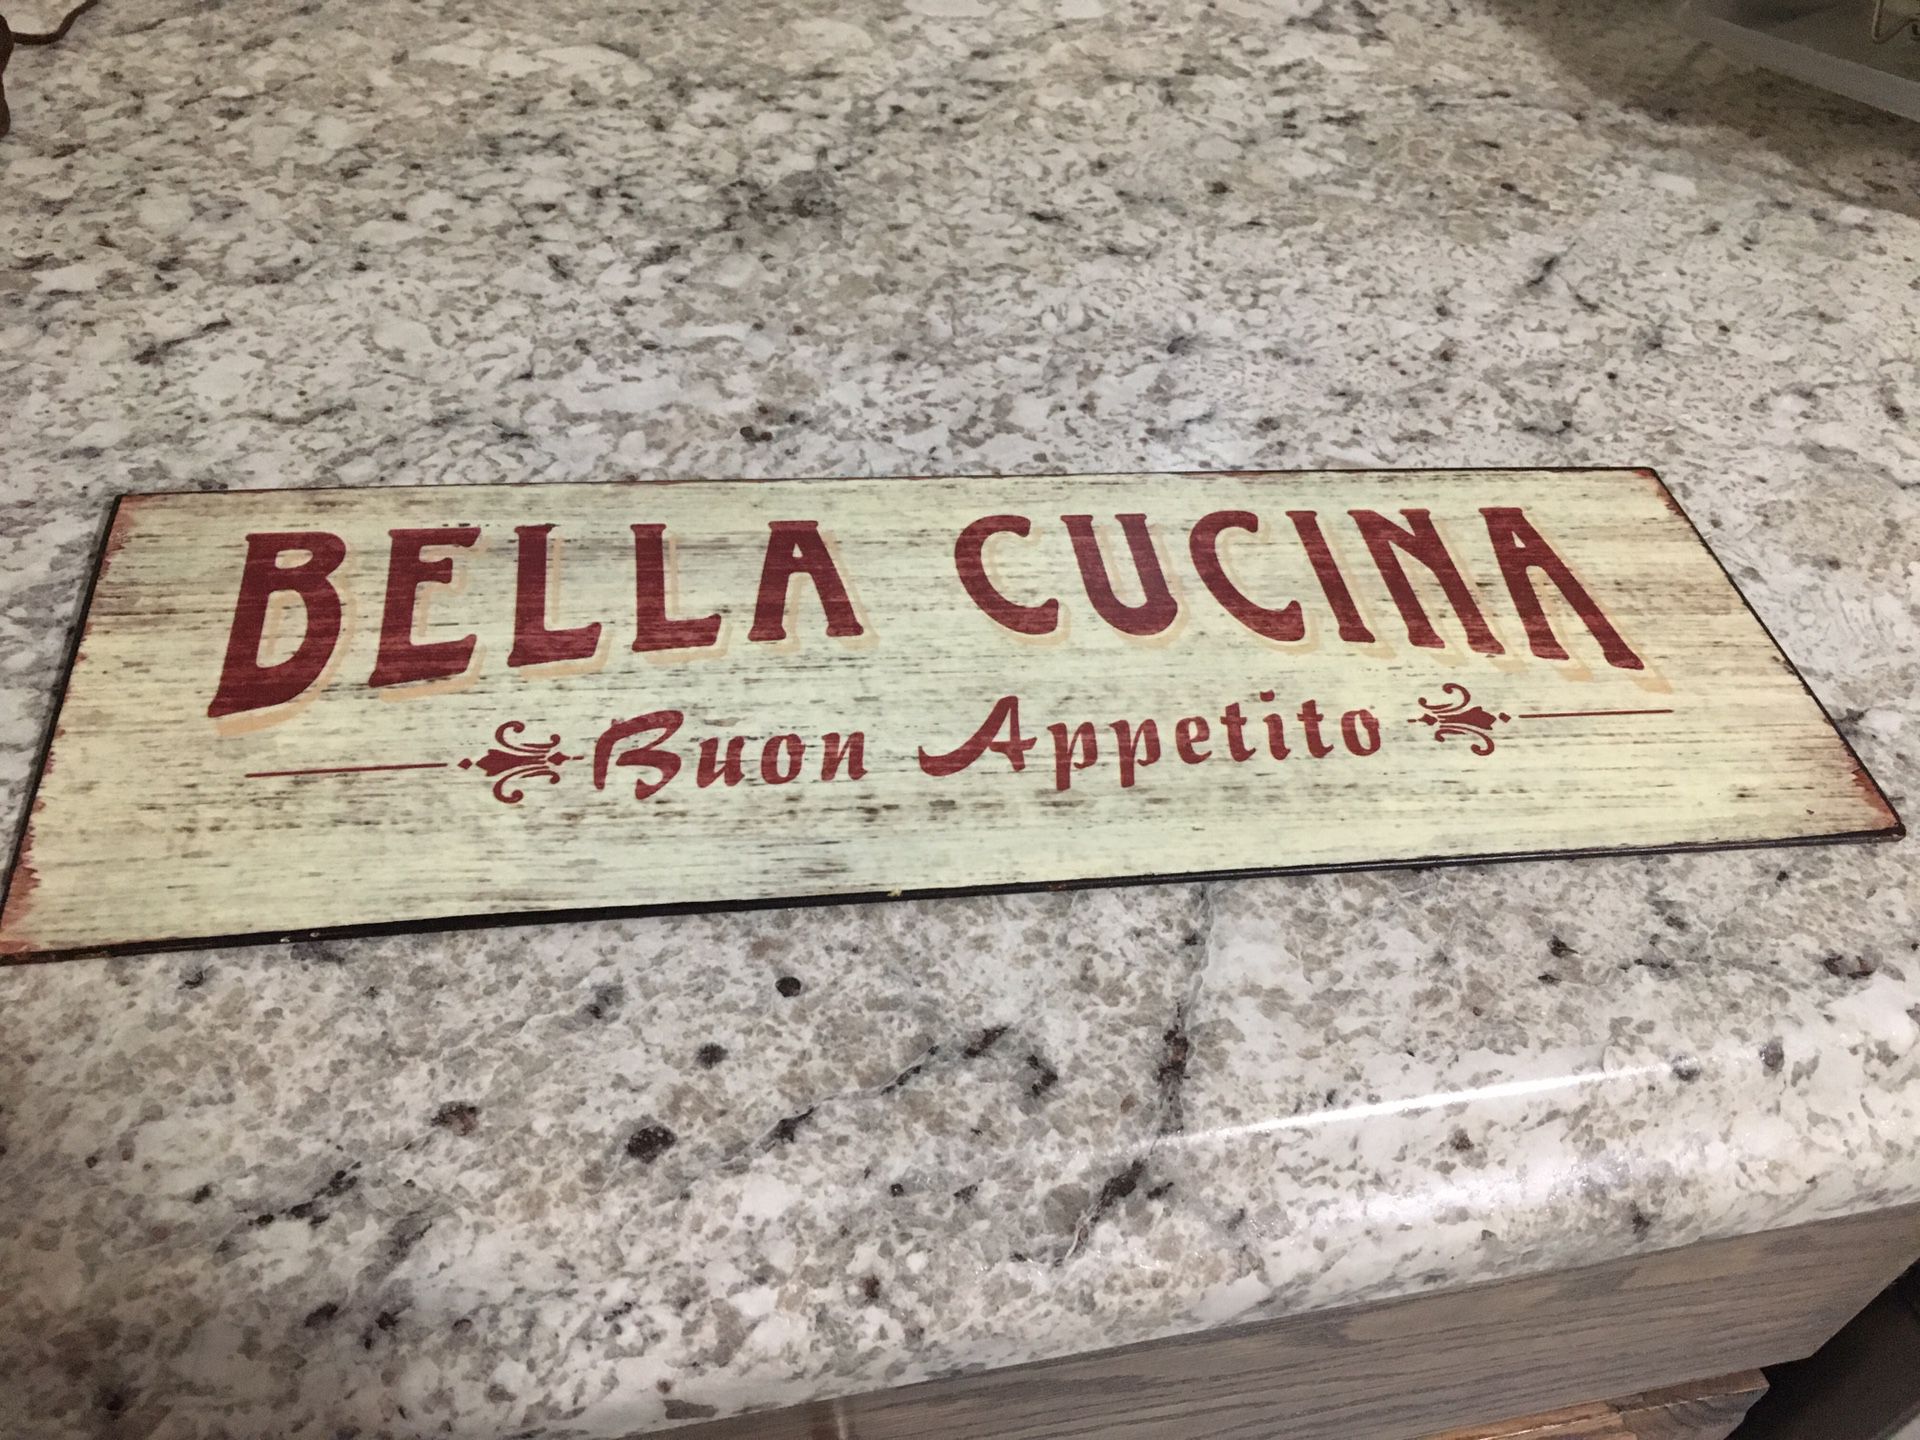 Rustic Italian kitchen word art